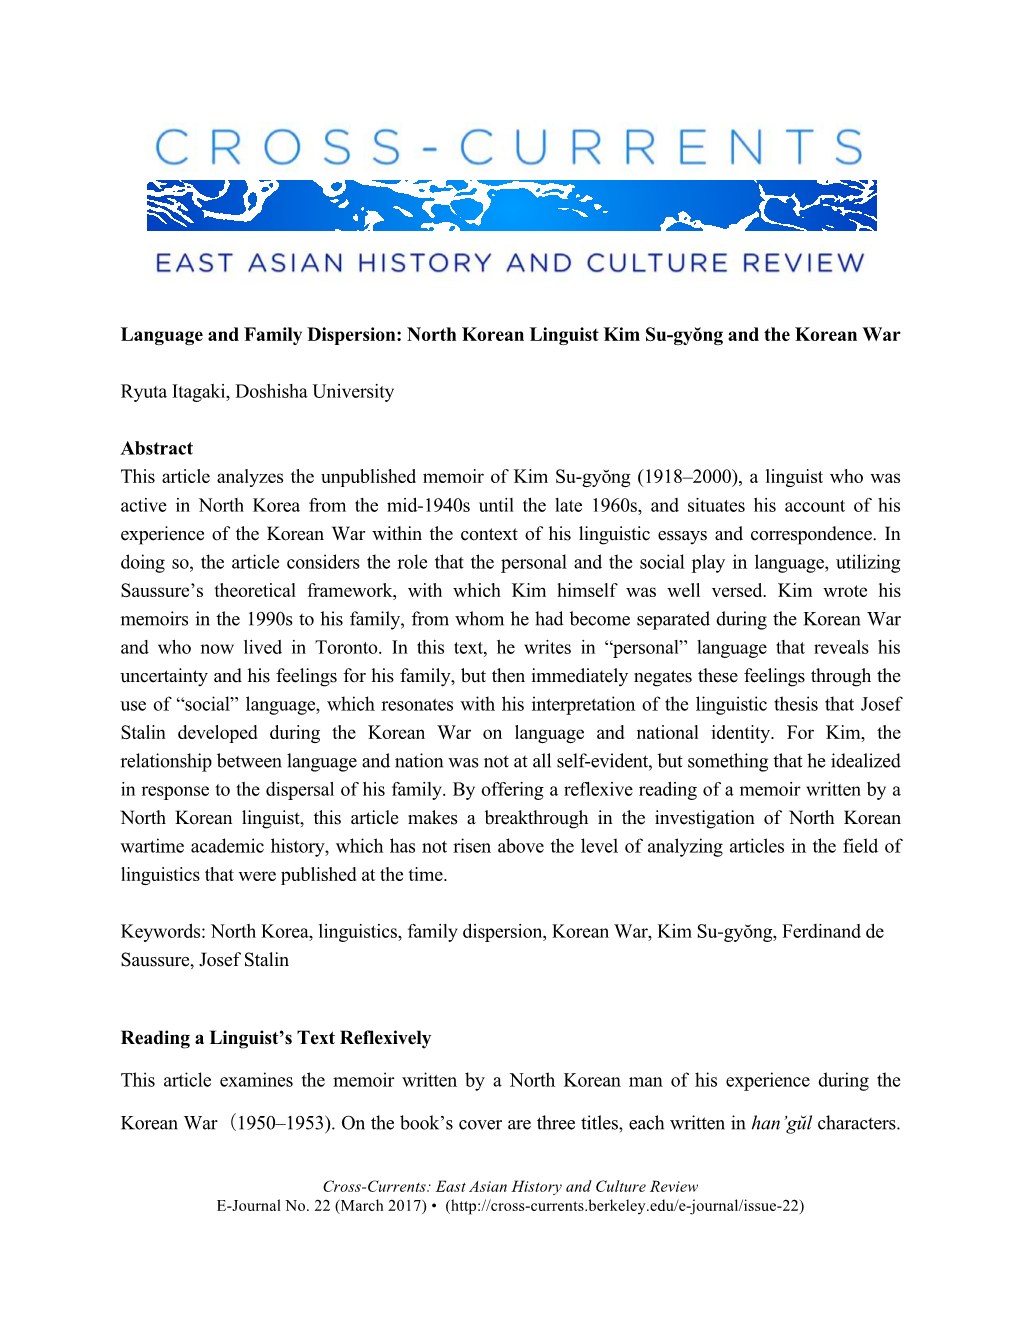 Language and Family Dispersion: North Korean Linguist Kim Su-Gyŏng and the Korean War